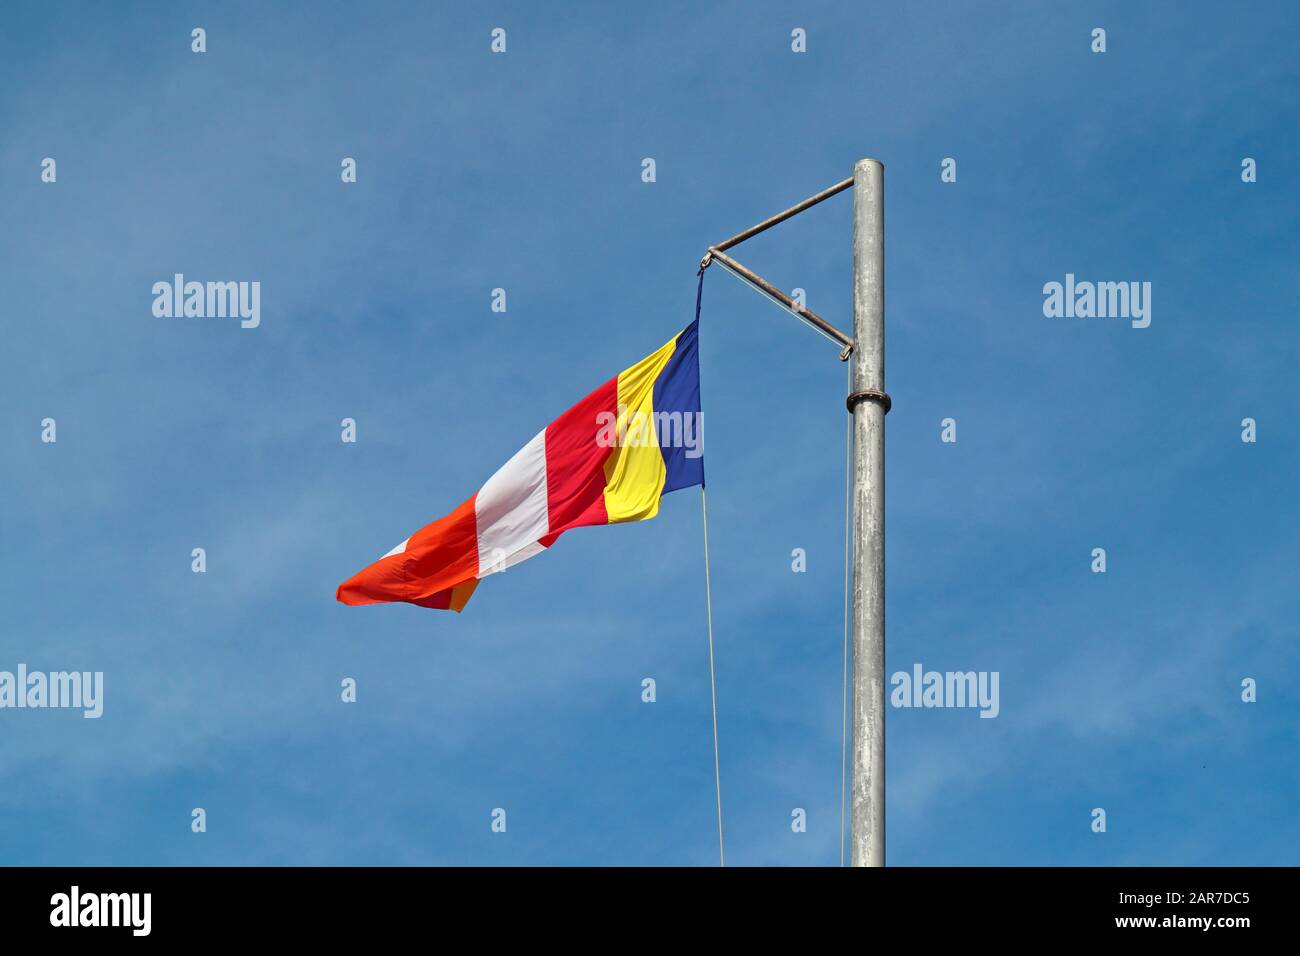 The Buddhist Flag on a galvanised steel flag pole against a blue sky Stock Photo